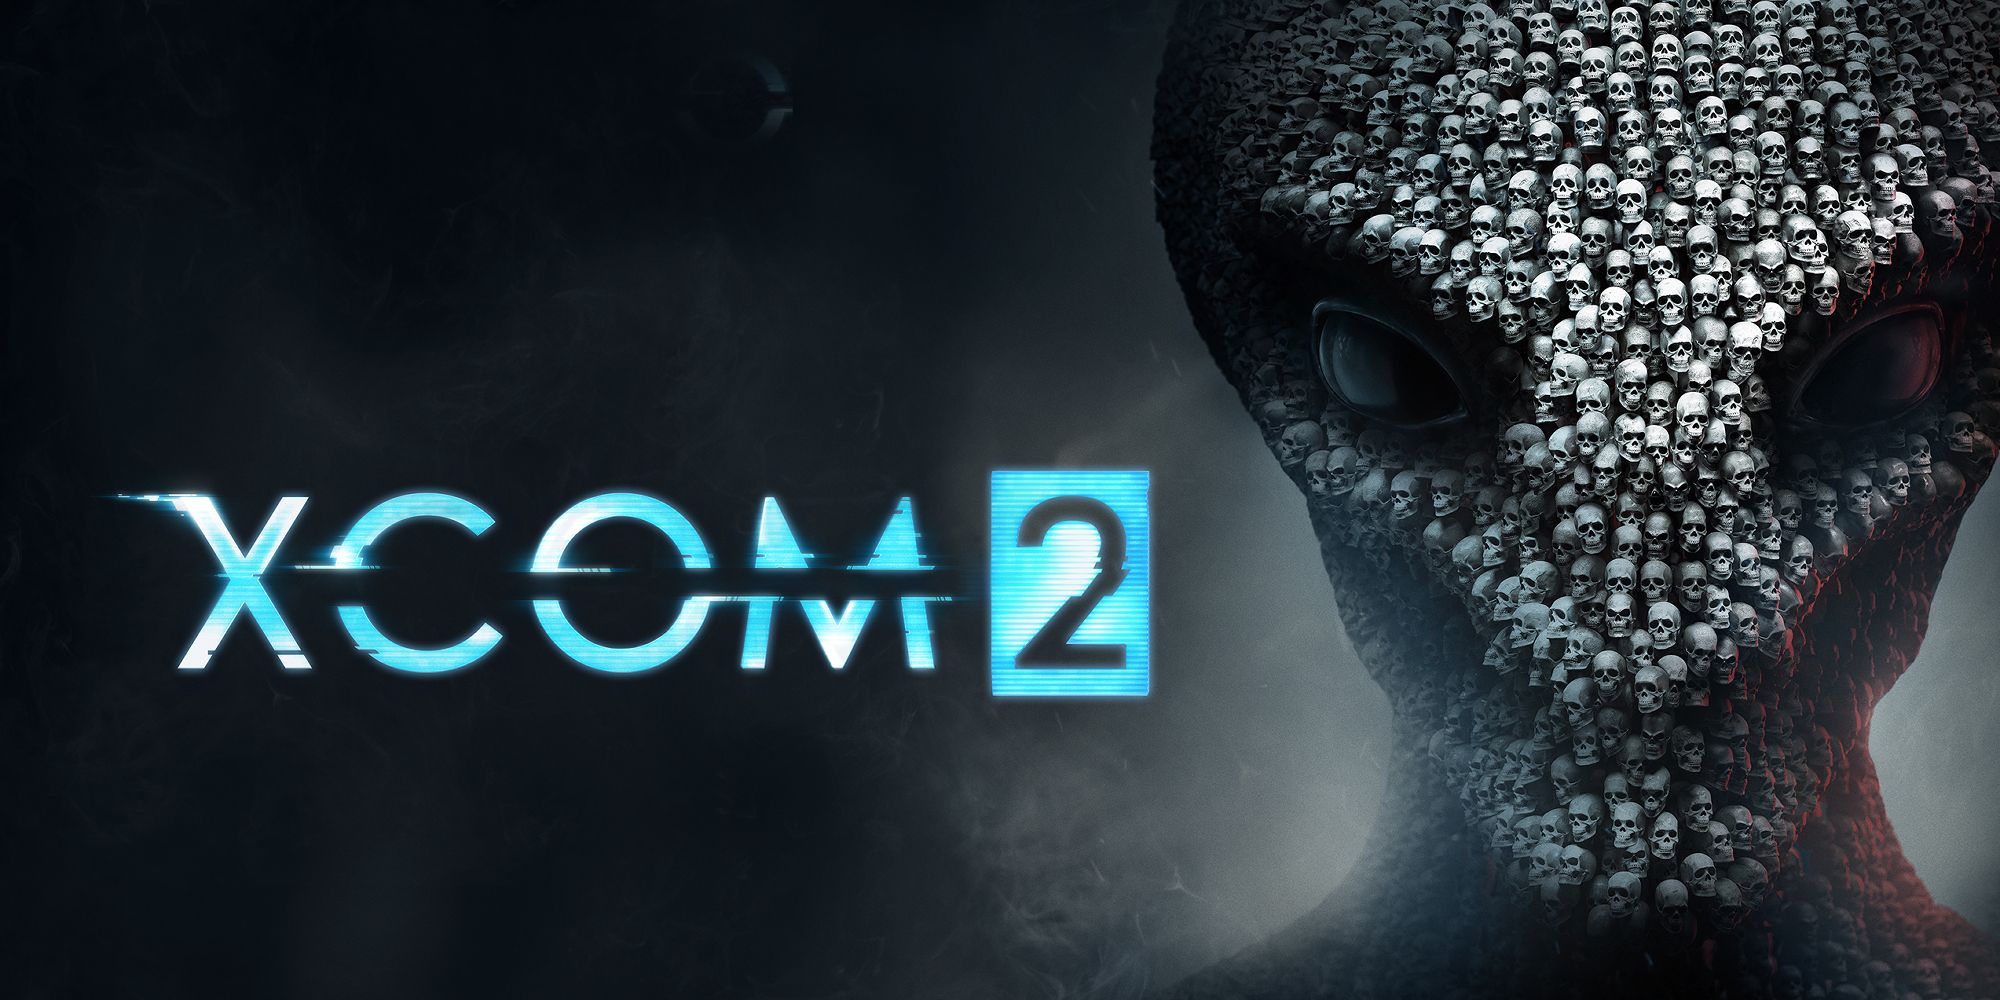 XCOM 2 Title And Alien